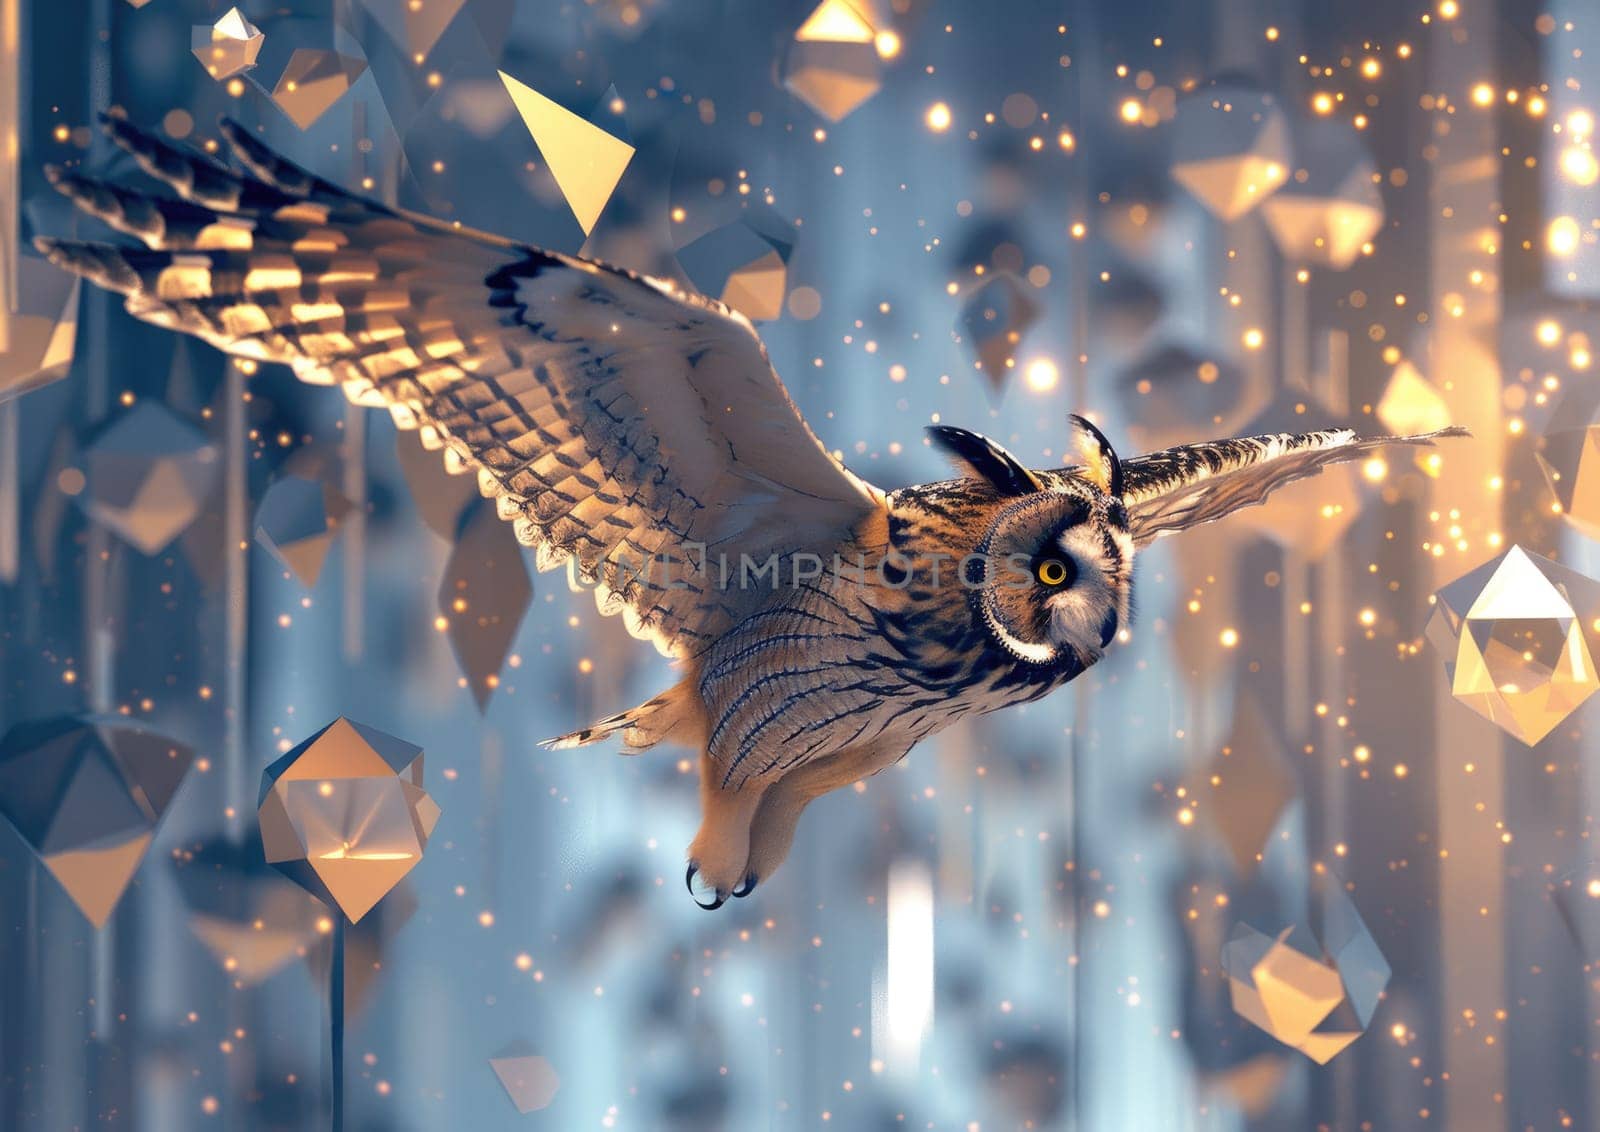 Long-eared Owl in mid-flight, its wings leaving a trail of stardust as it soars through a surreal, geometric landscape.